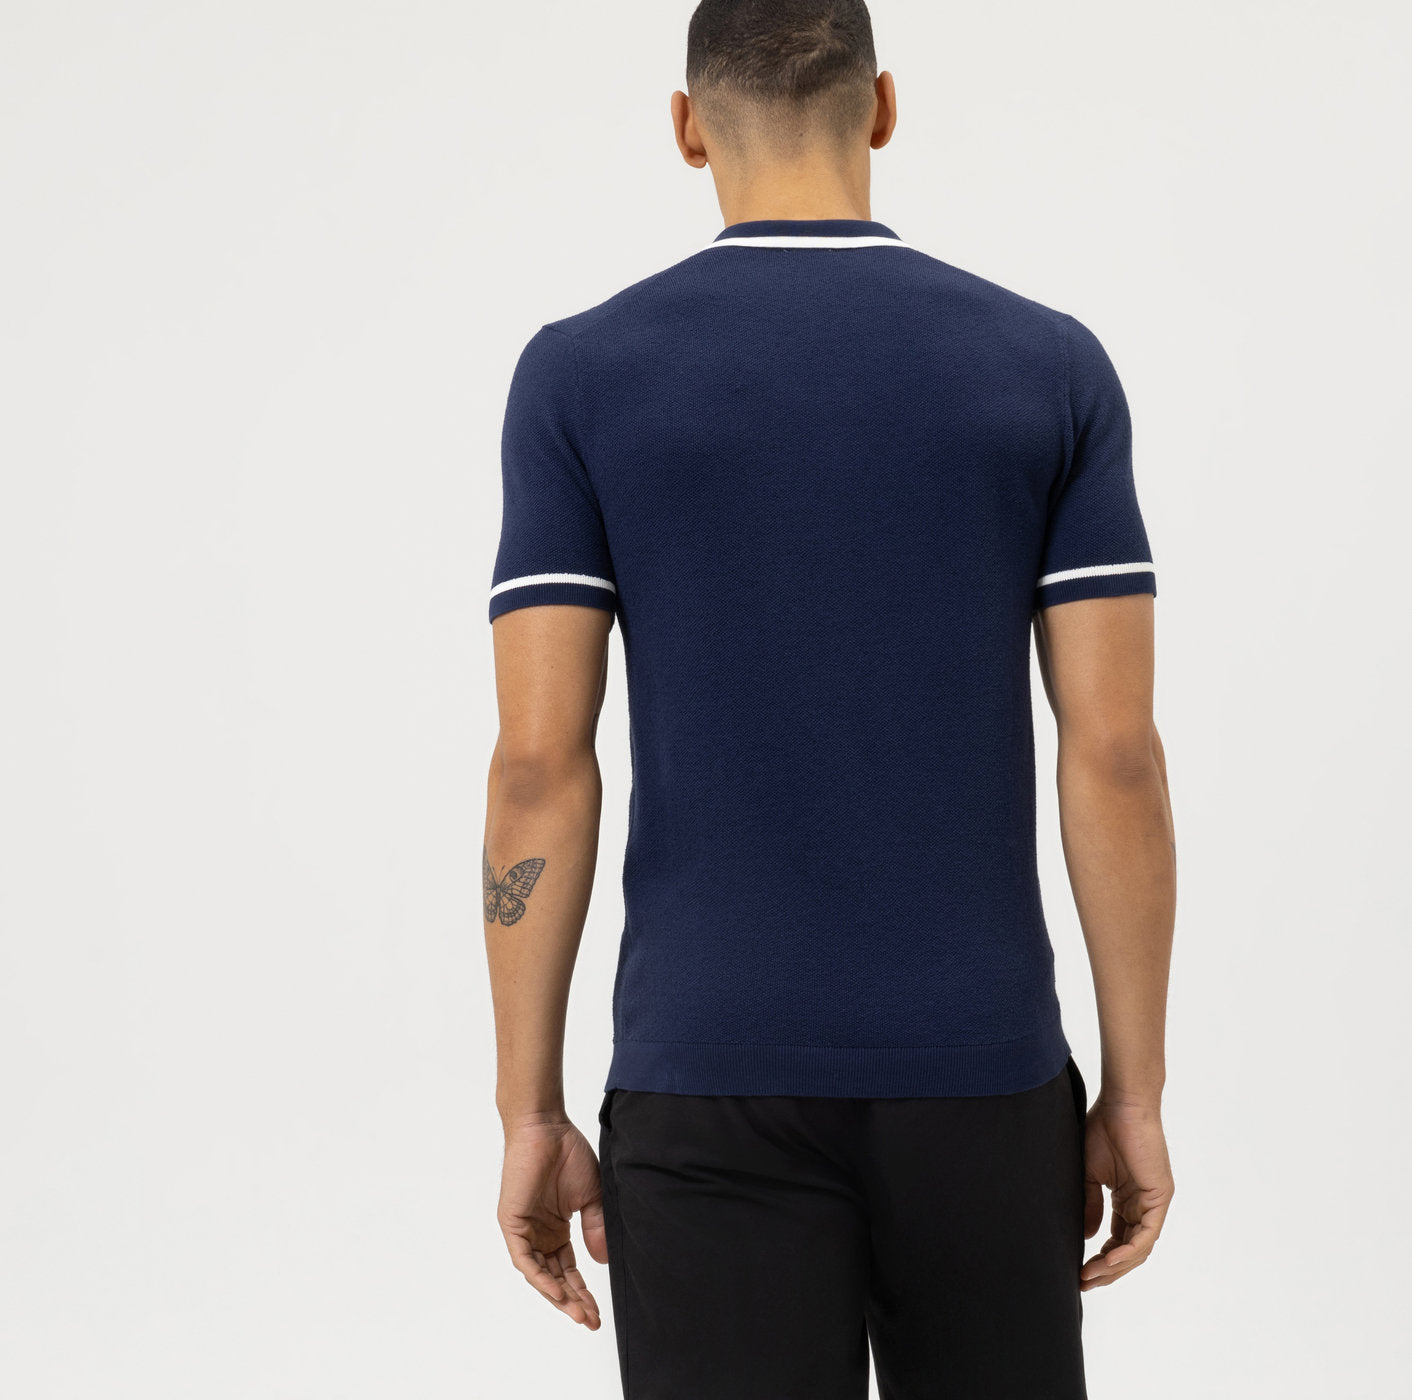 Jean shirt - Blue - Modern fit - Casual